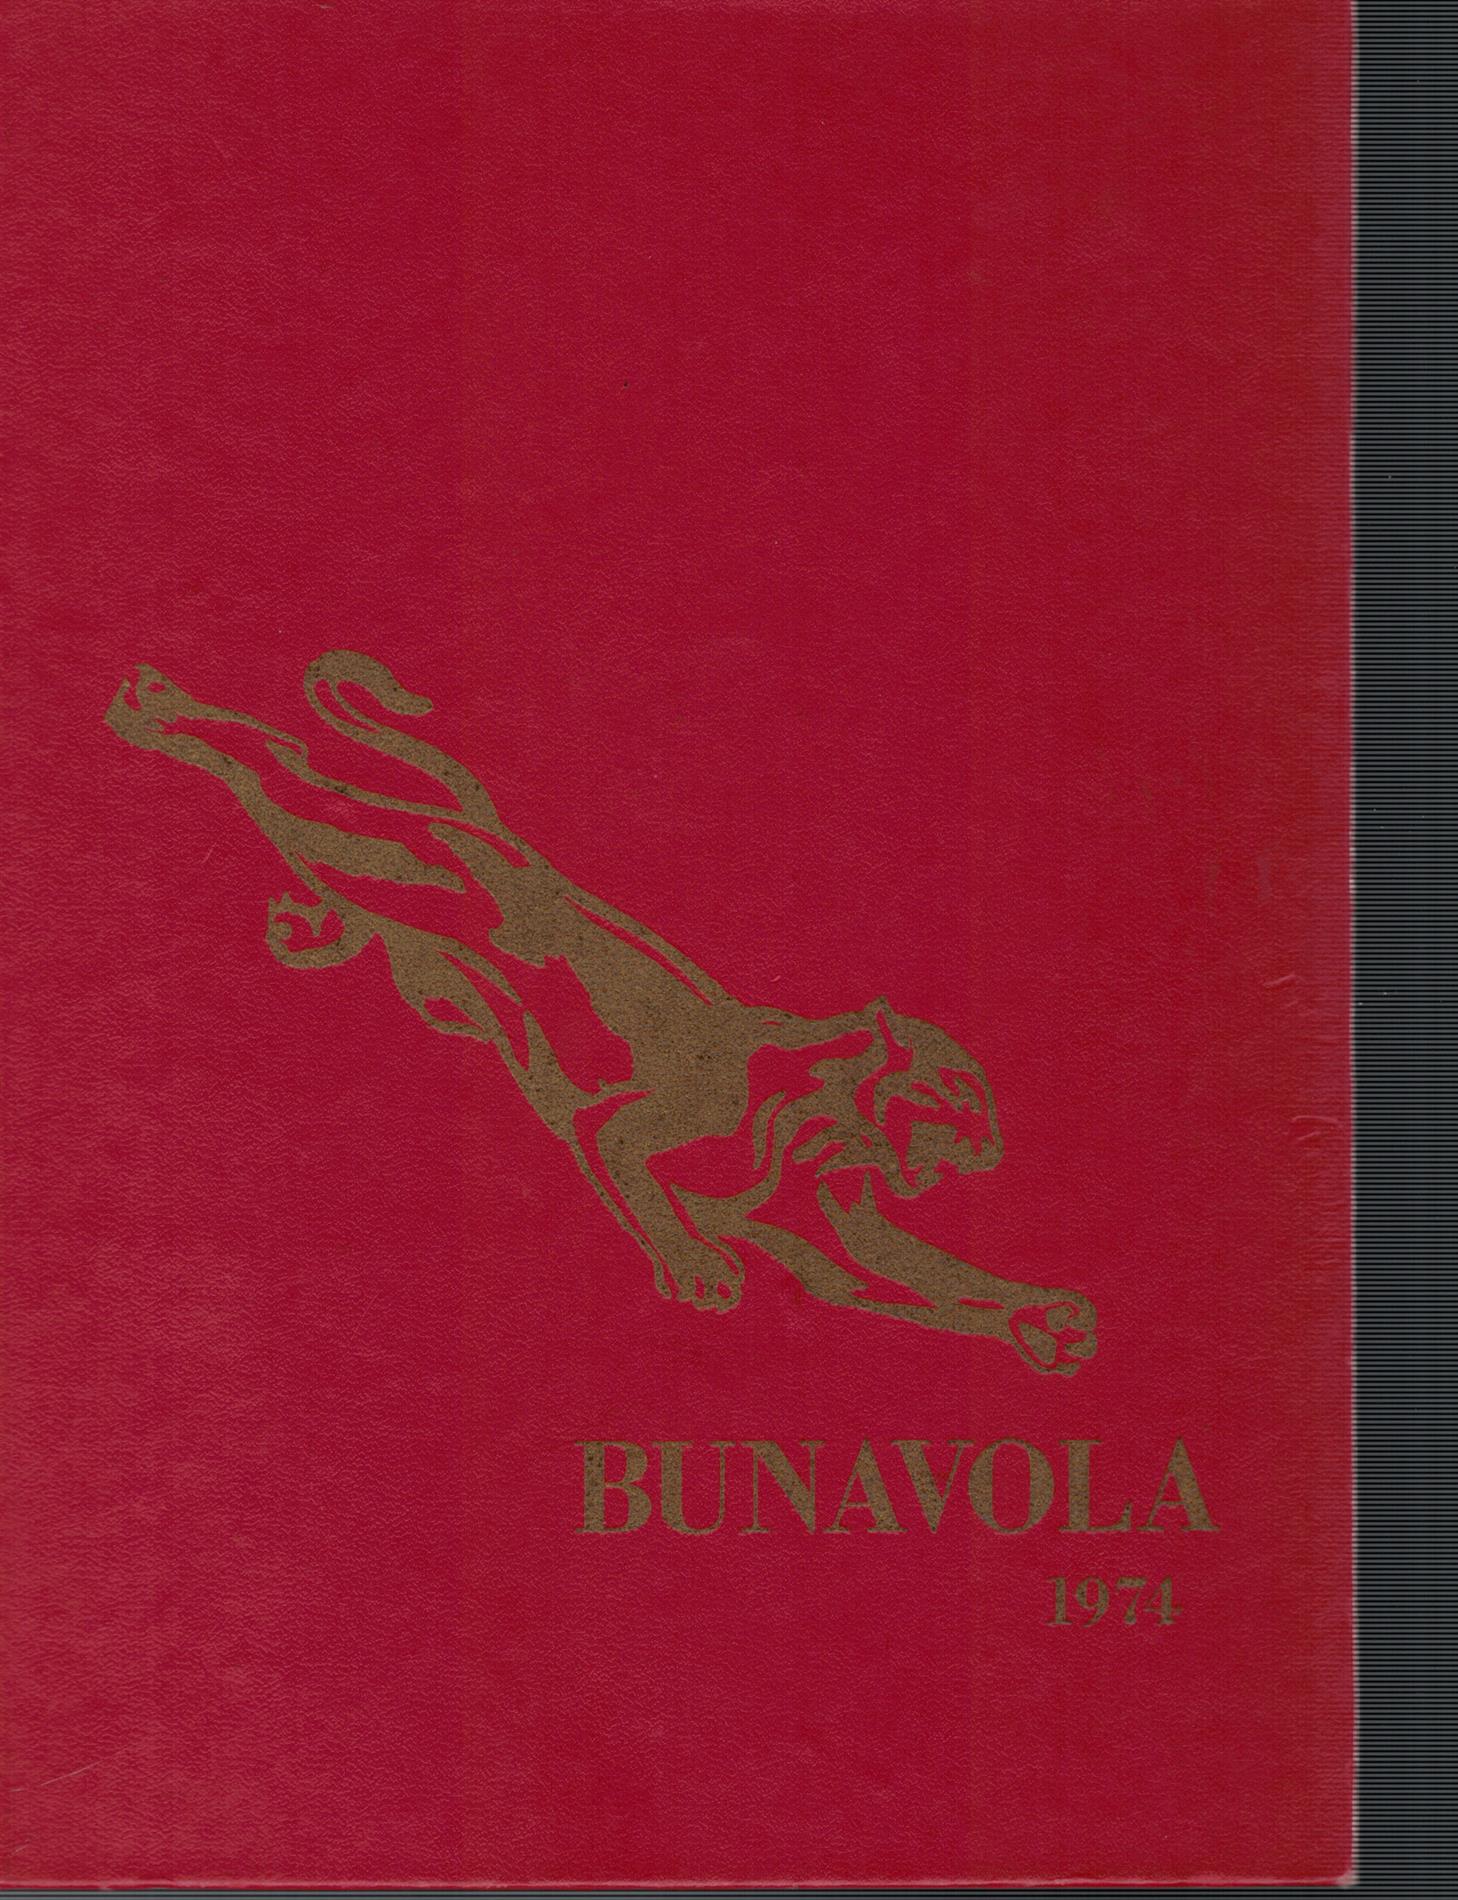 1974 Bunavola